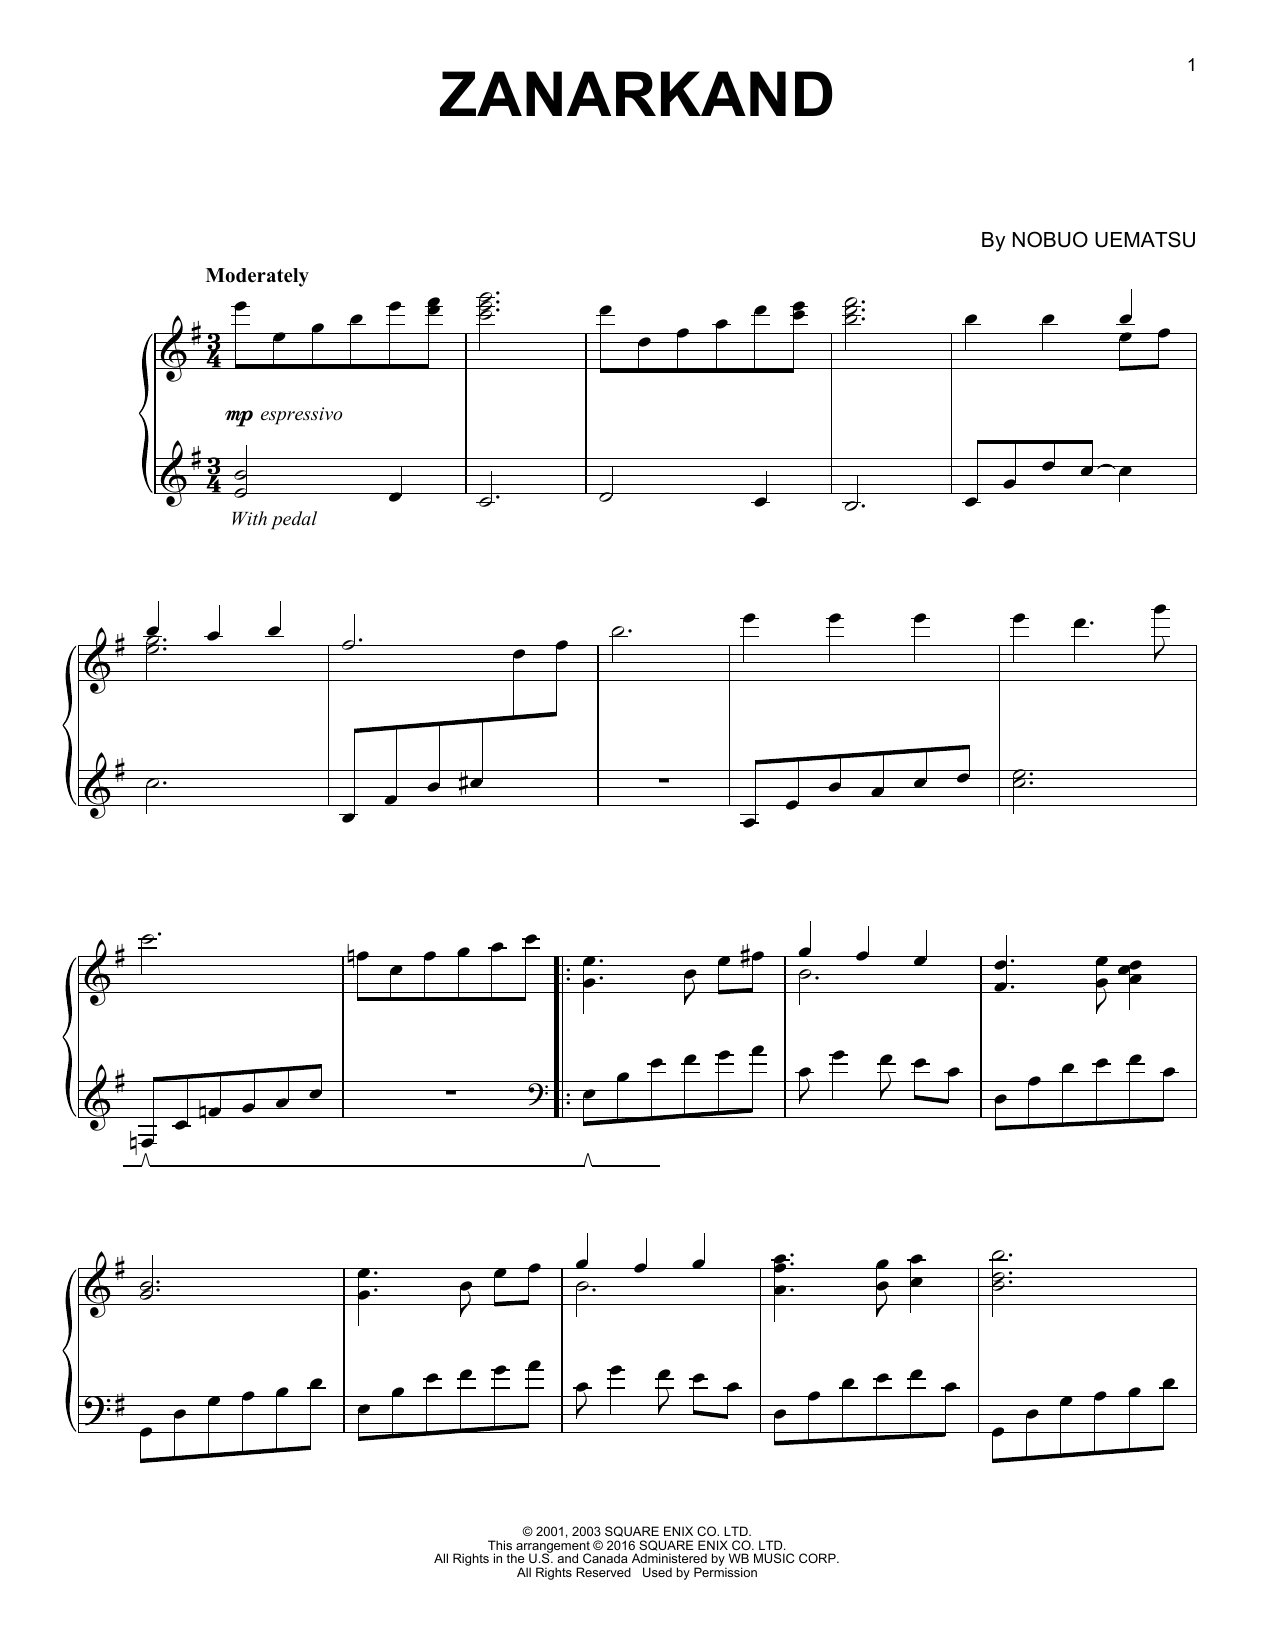 Download Nobuo Uematsu Zanarkand Sheet Music and learn how to play Piano PDF digital score in minutes